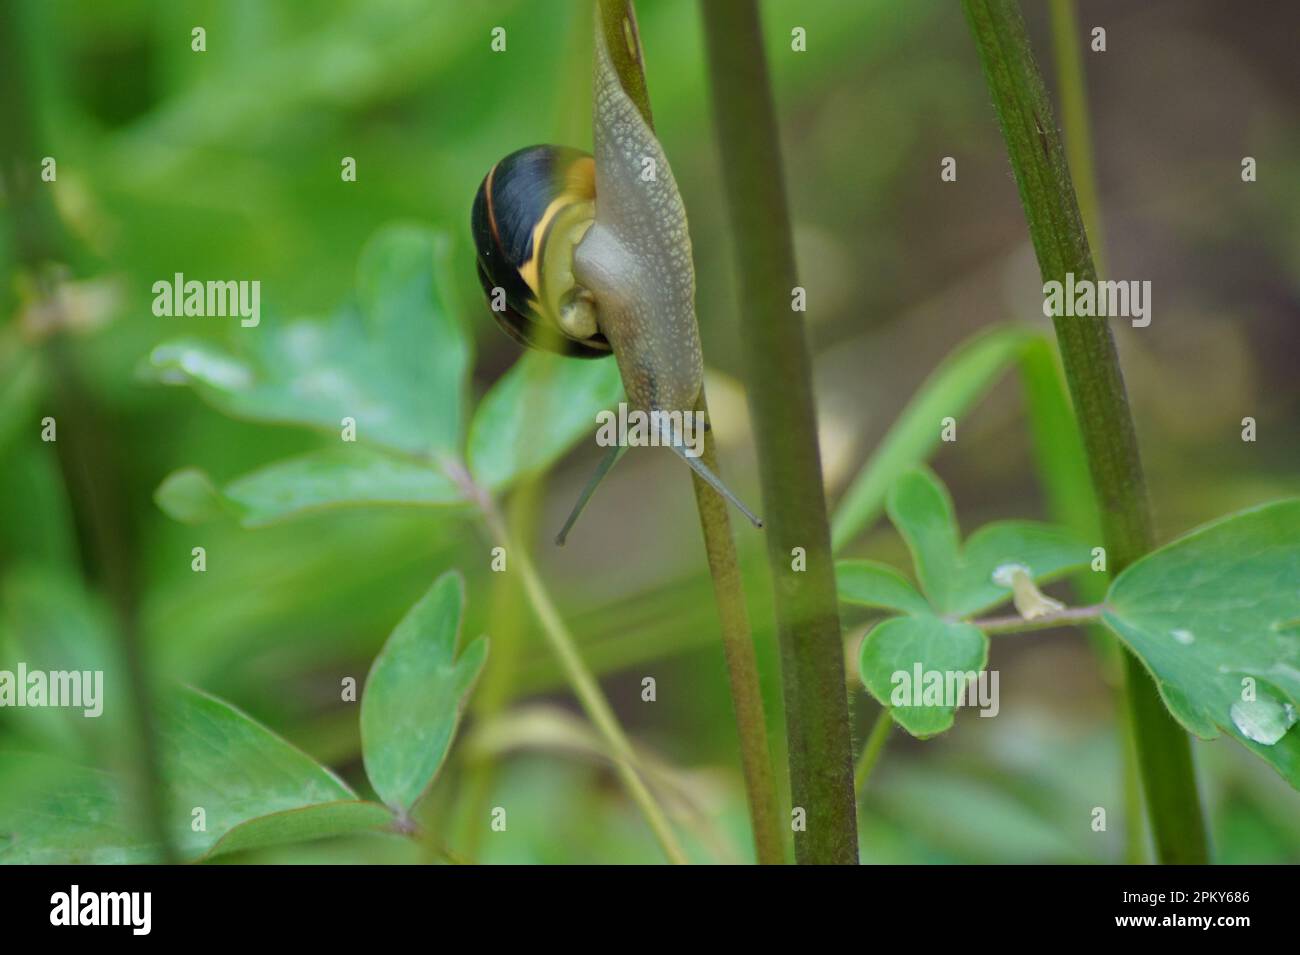 Cepaea snail on a herbaceous stalk Stock Photo